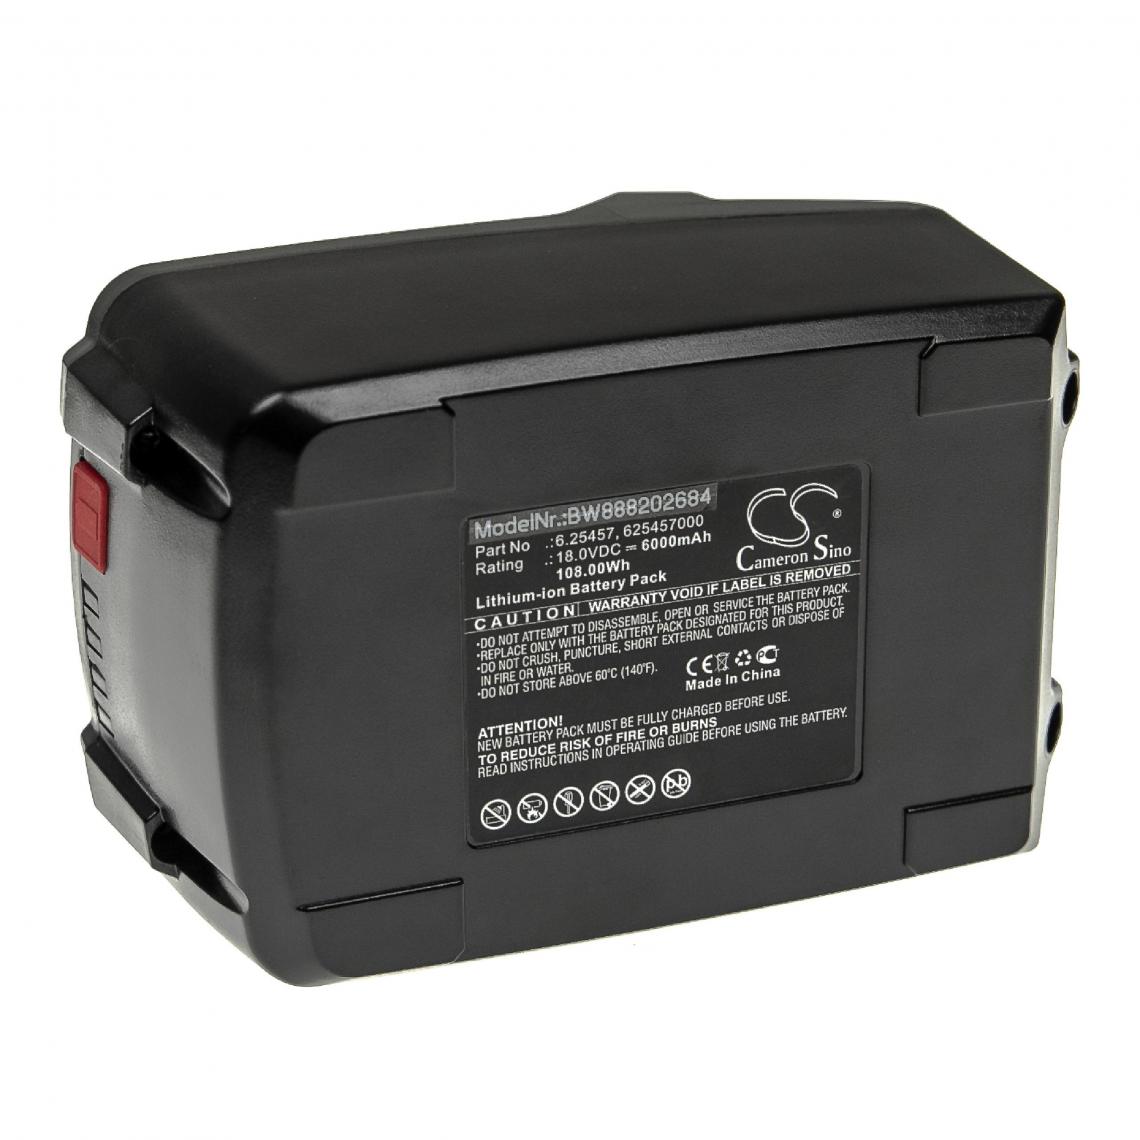 Vhbw - vhbw Batterie compatible avec Metabo SB 18 LTX BL I 602352840, SB 18 LTX BL I 602352890 outil électrique (6000mAh Li-ion 18 V) - Autre appareil de mesure